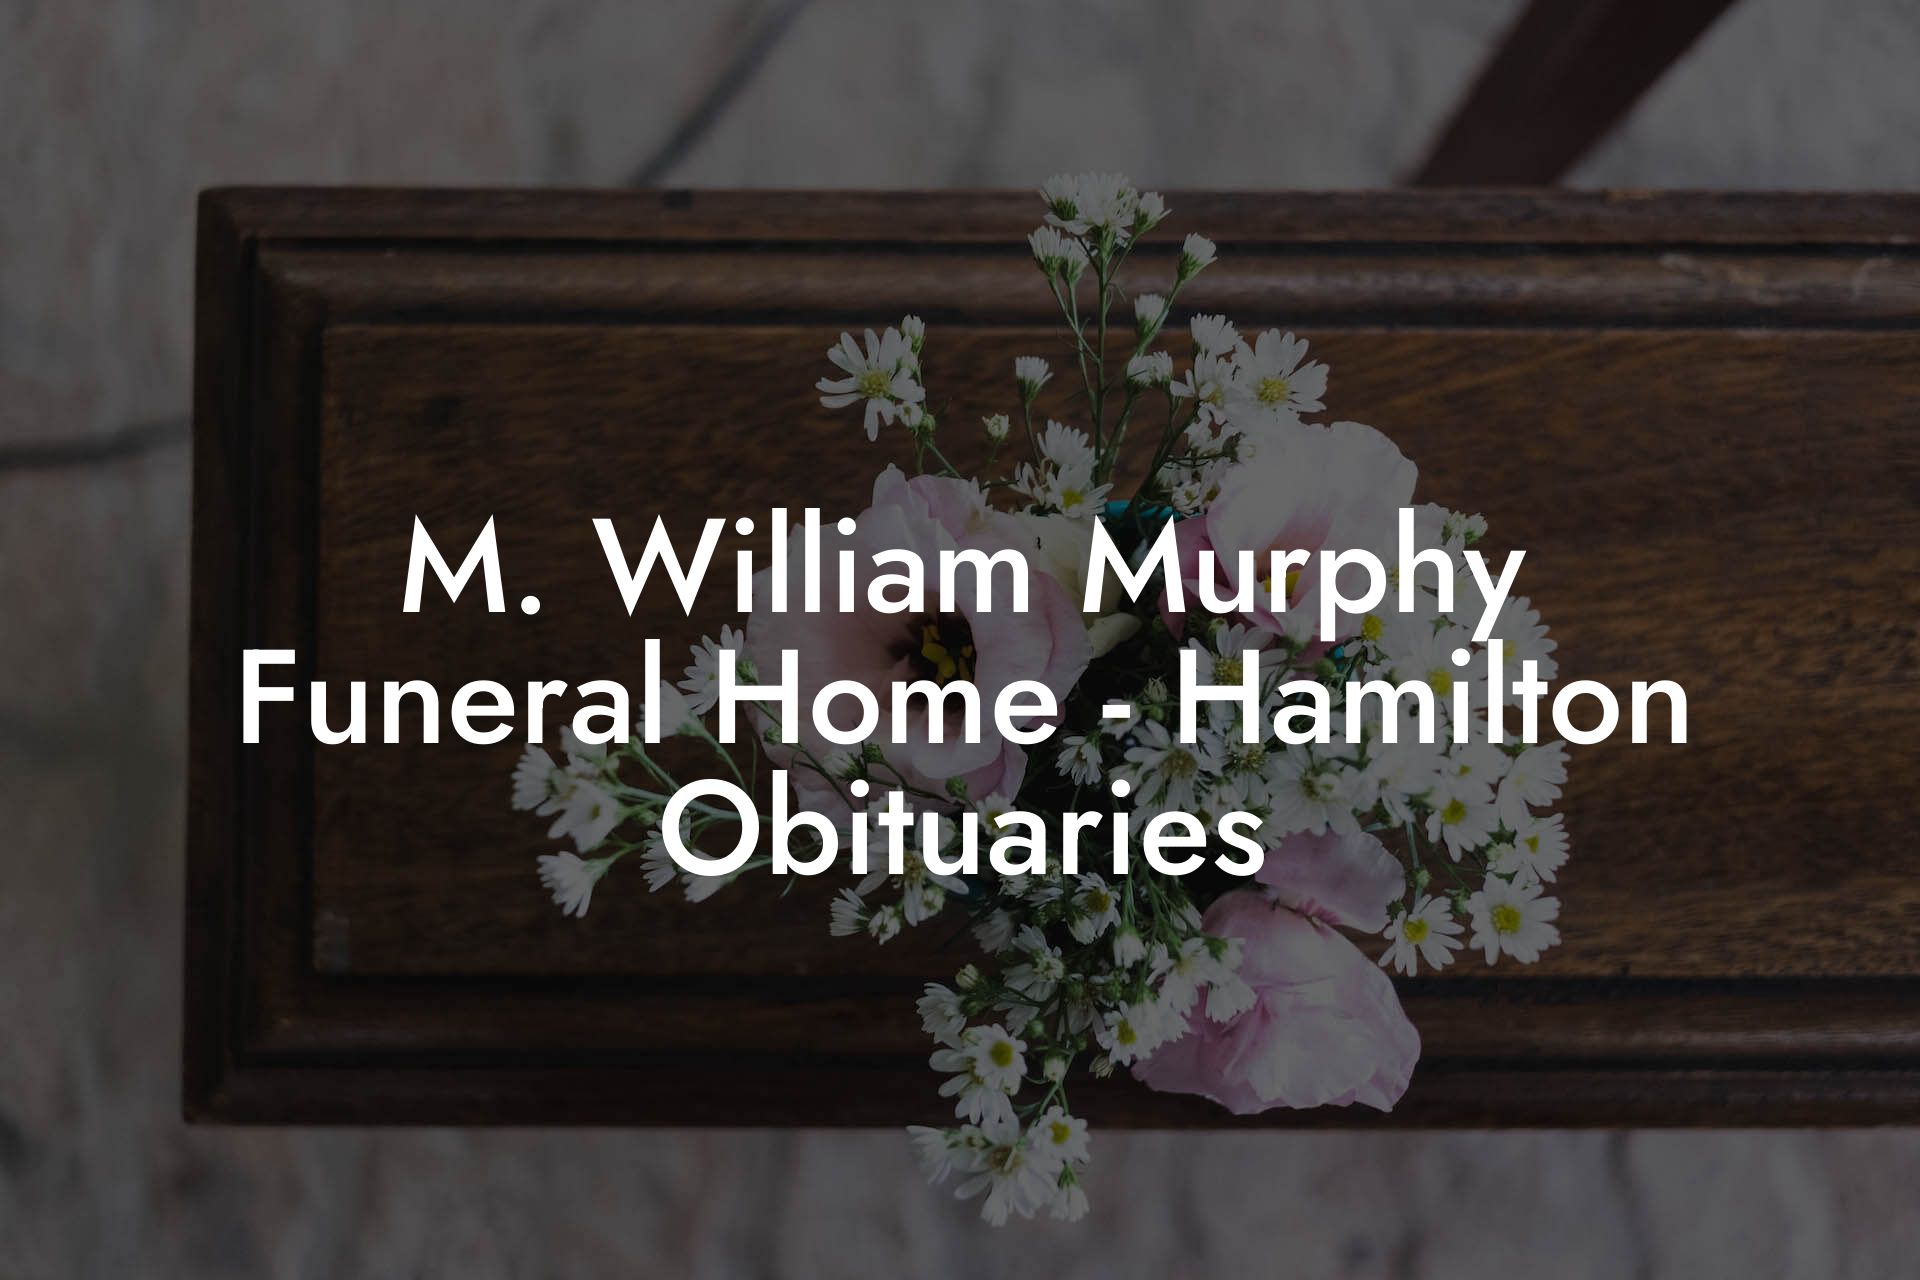 M. William Murphy Funeral Home - Hamilton Obituaries